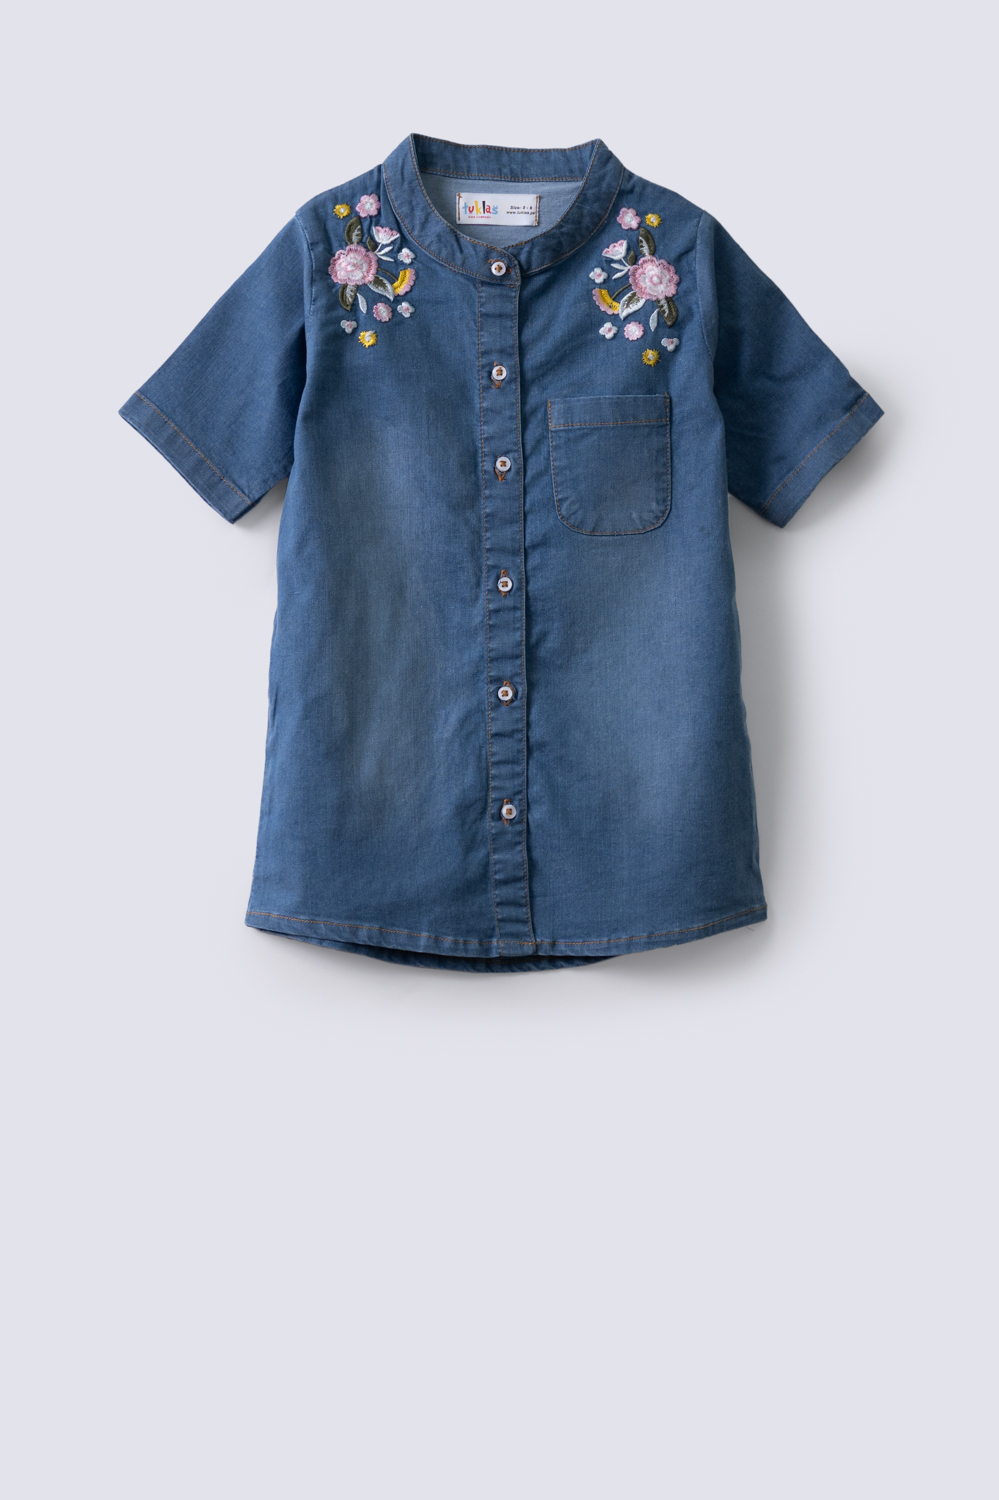 PD&C Paper Denim and Cloth Western Shirt Pearl Snap Plaid Girls 14 16 Boho  Top | eBay